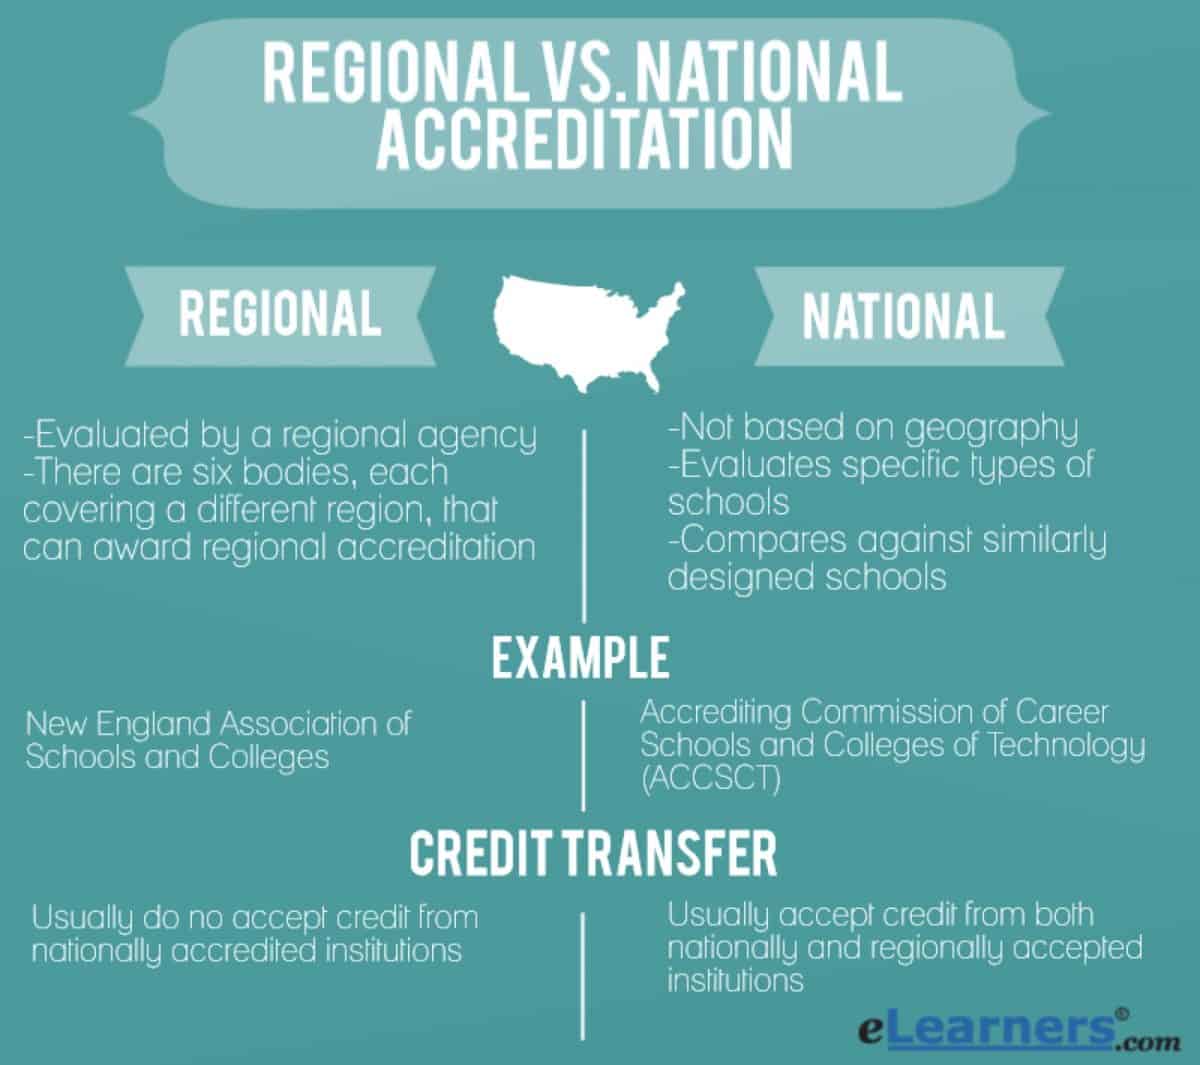 Regional vs. National Accreditation